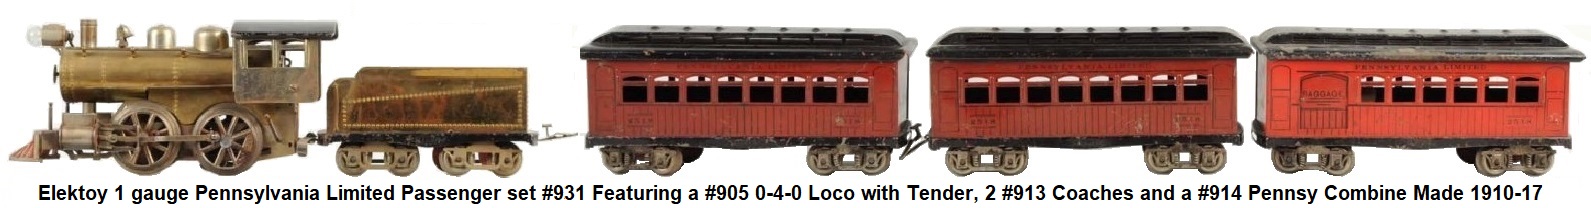 Elektoy #1 gauge Pennsylvania Limited Passenger Set with #905 0-4-0 Steam Outline loco, 8-wheel tender, 2 #913 Pennsylvania Coaches, #914 Pennsylvania Combo car, made 1010-17